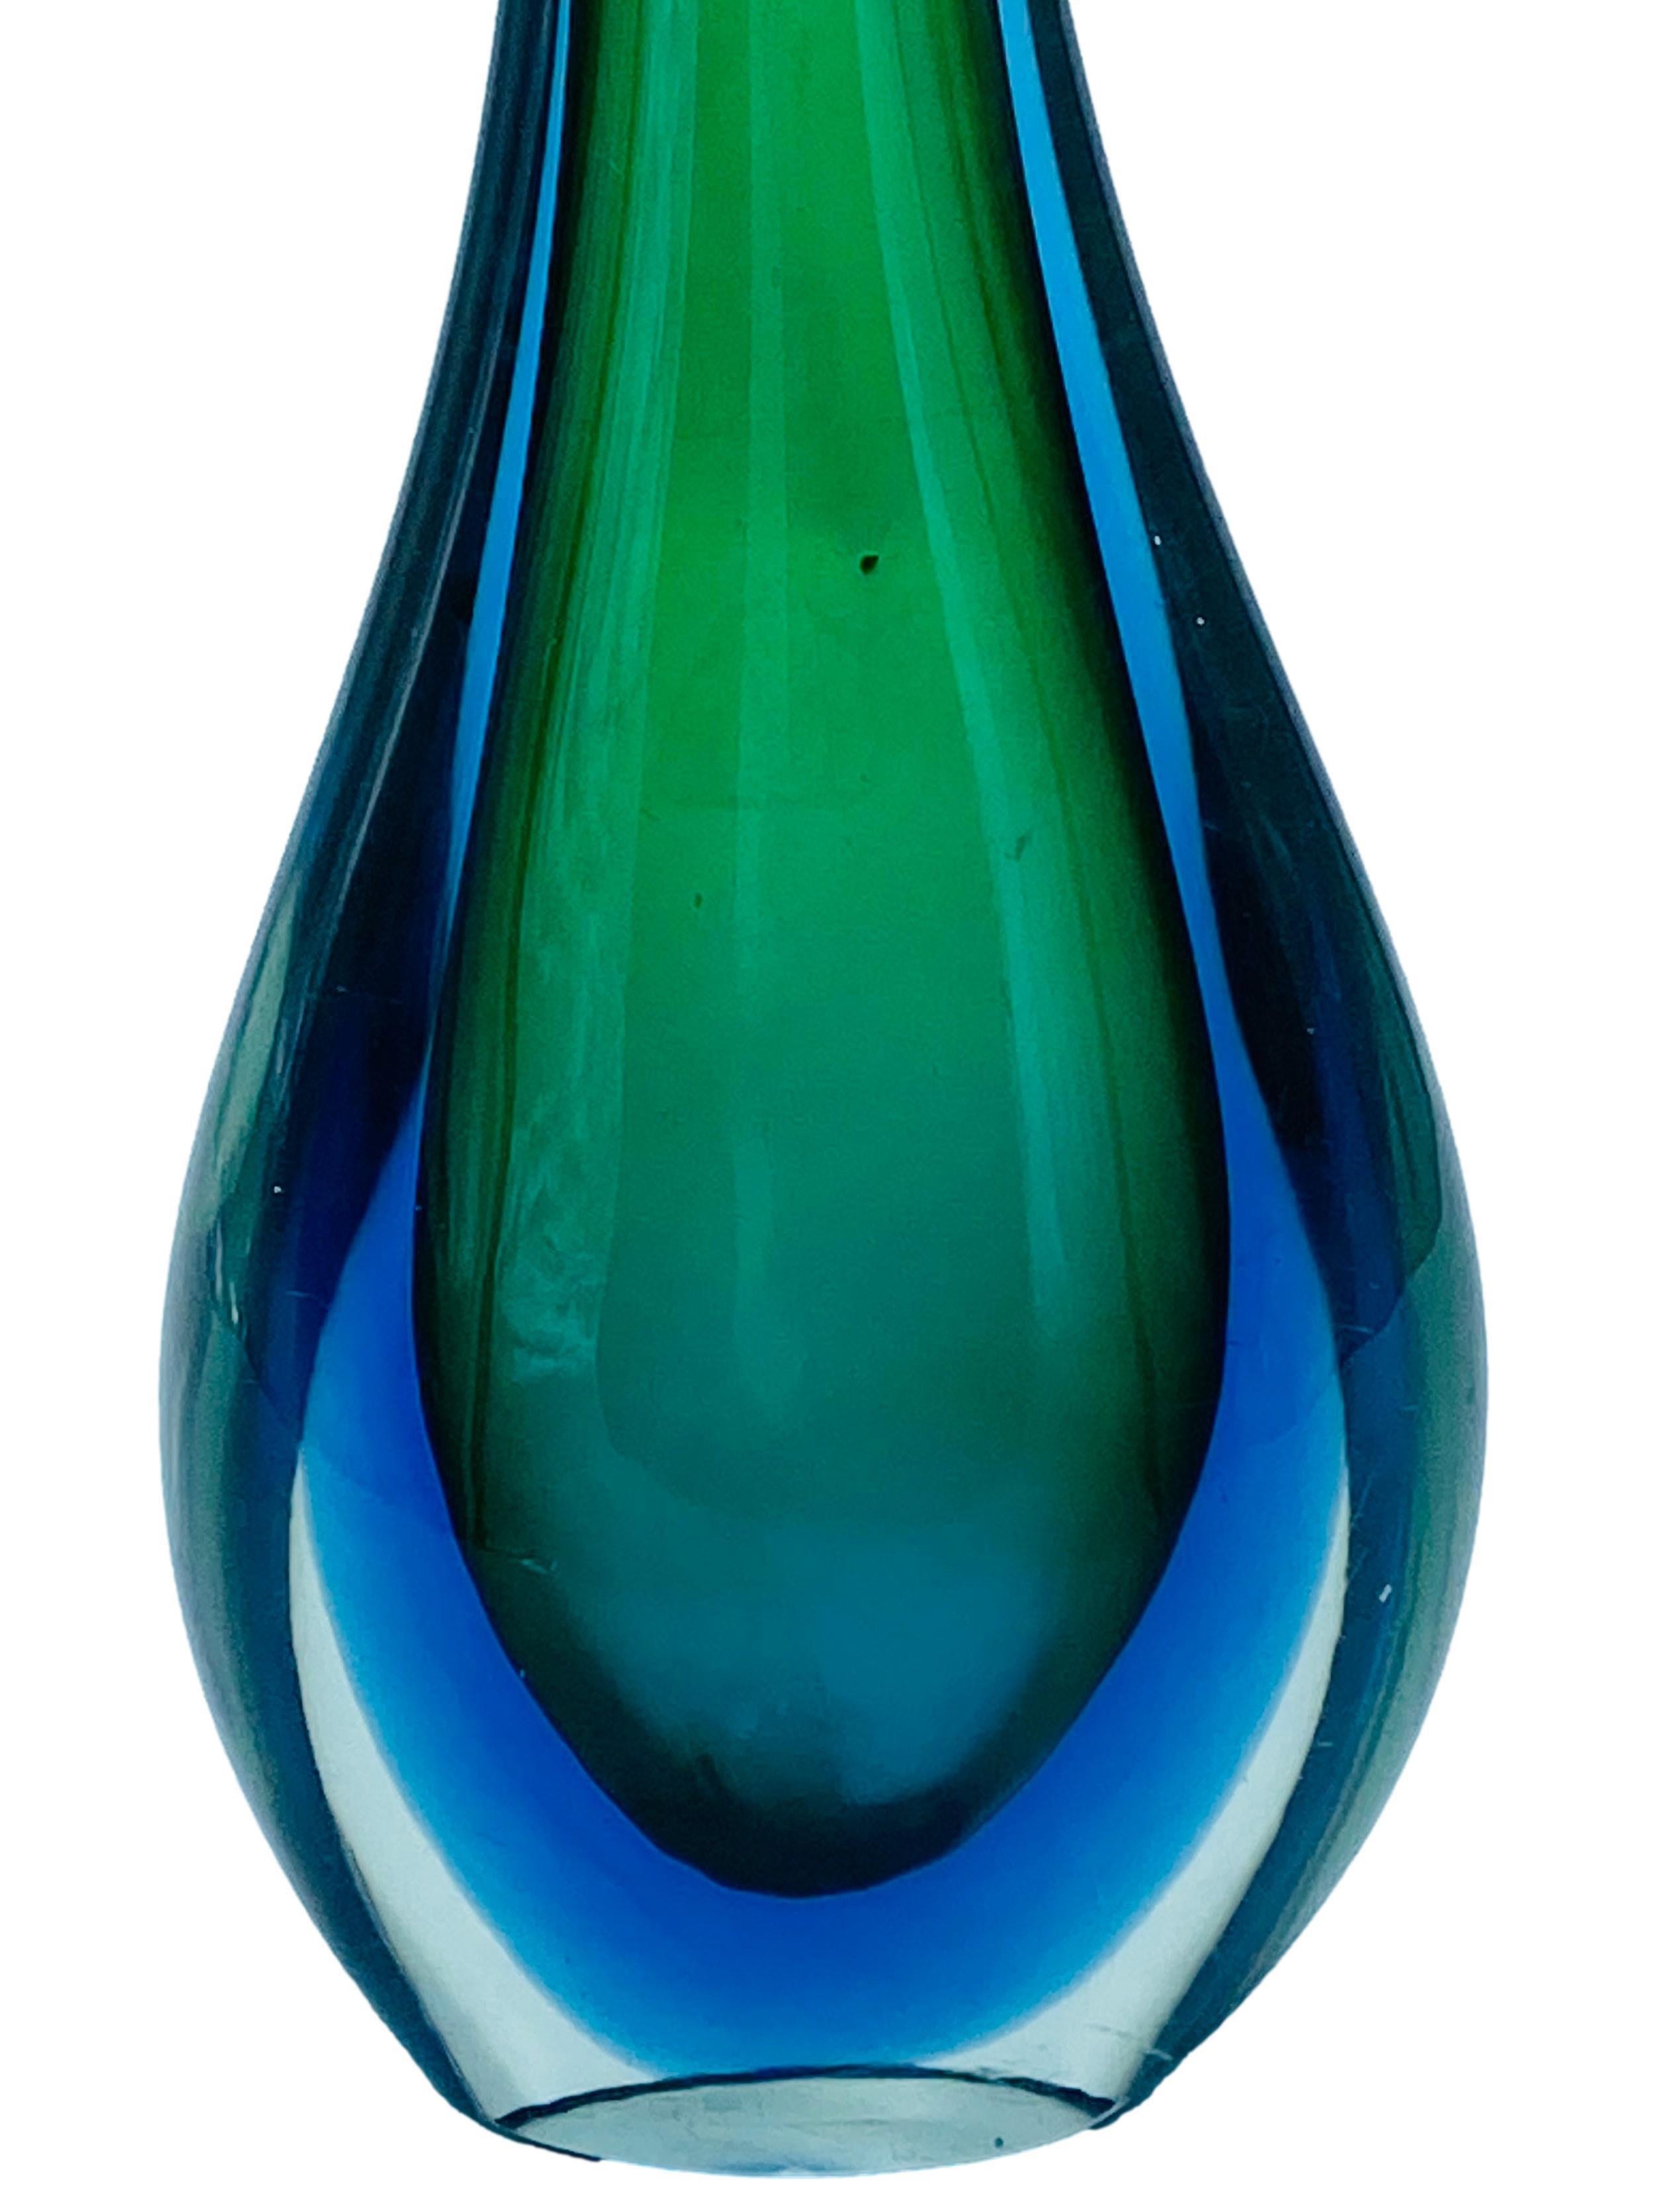 Italian Flavio Poli for Seguso Murano Glass Vase, Italy 1960s